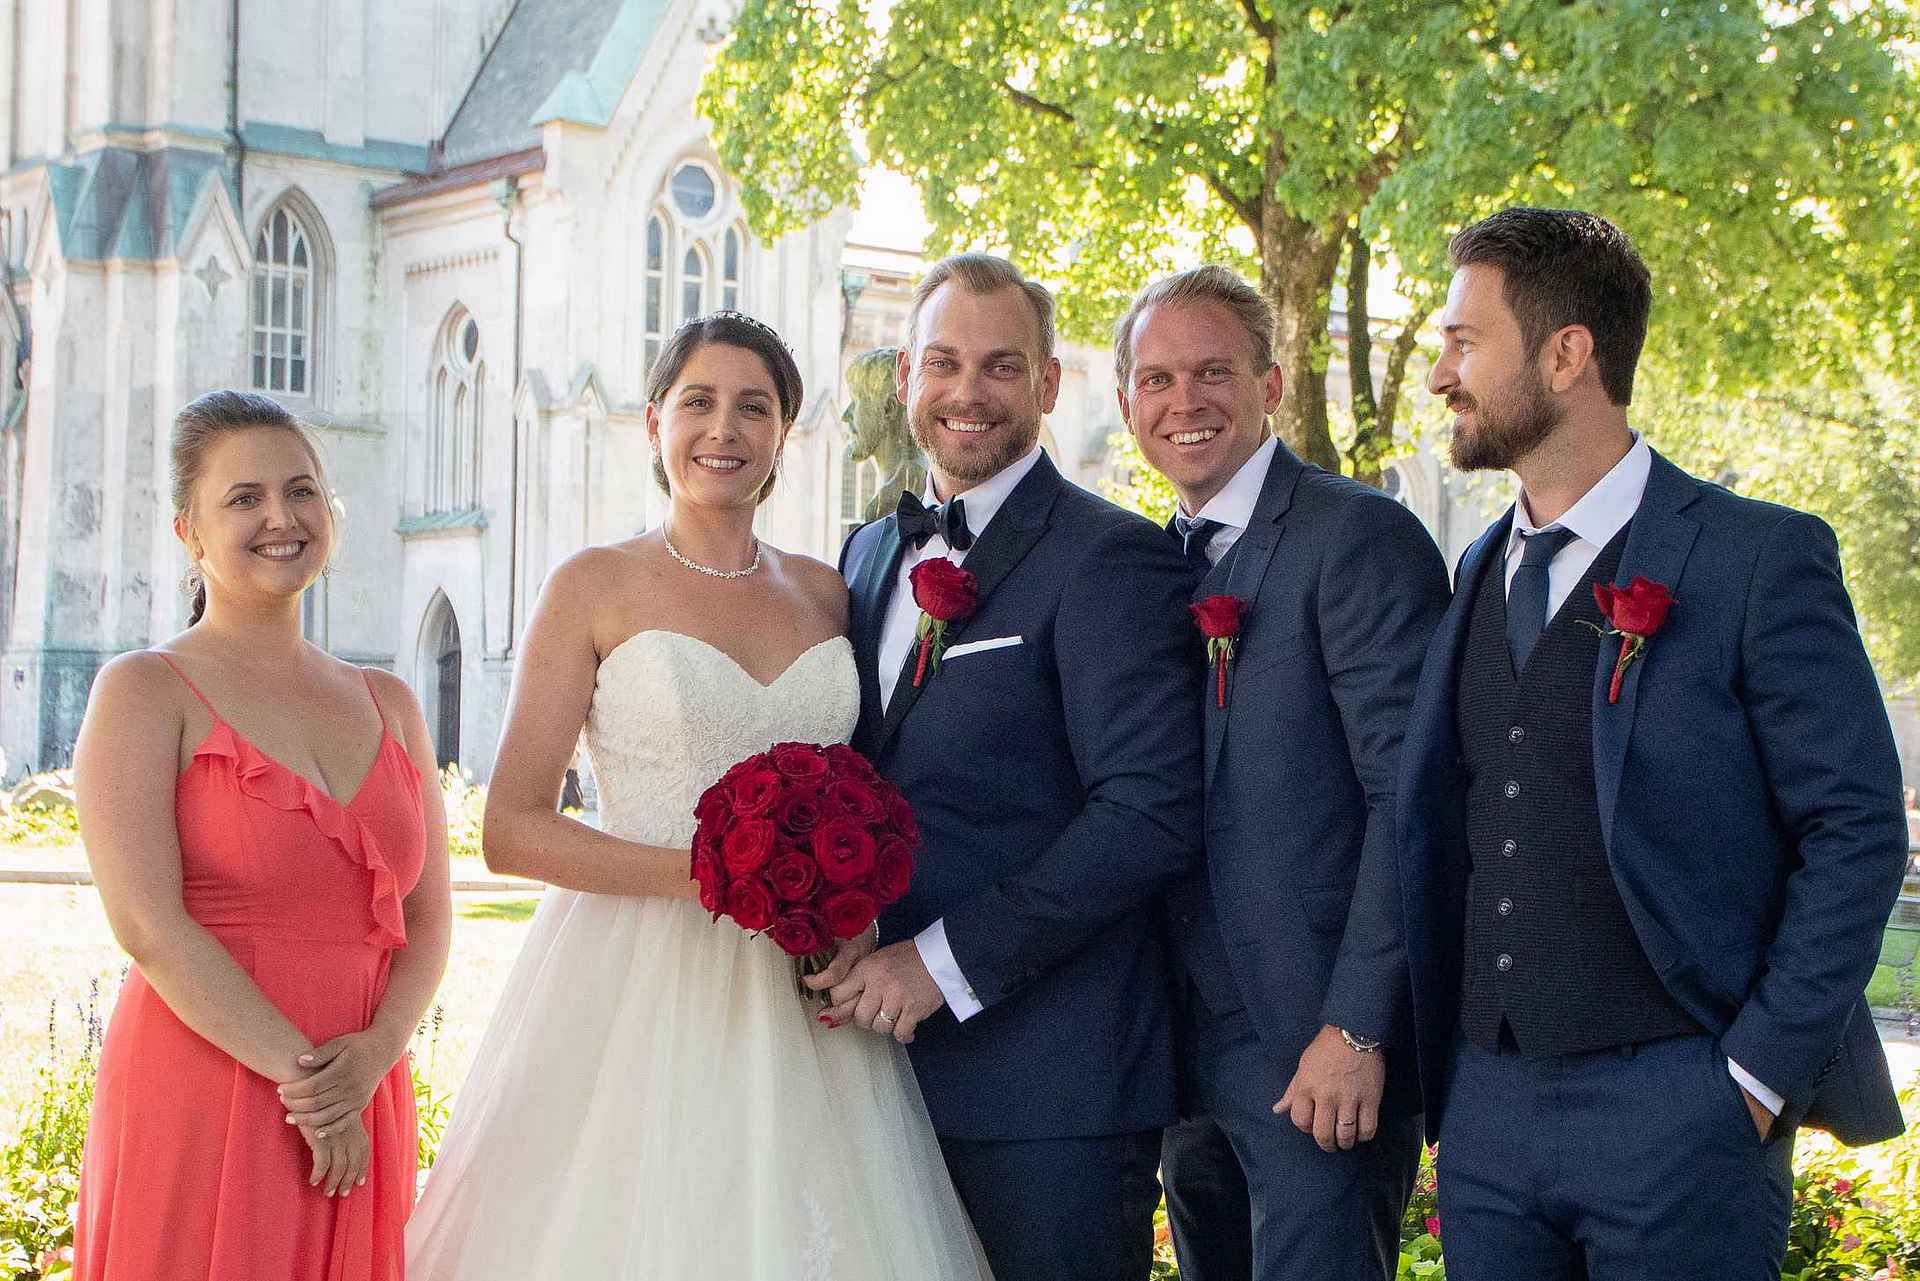 Wedding photographer in Norway